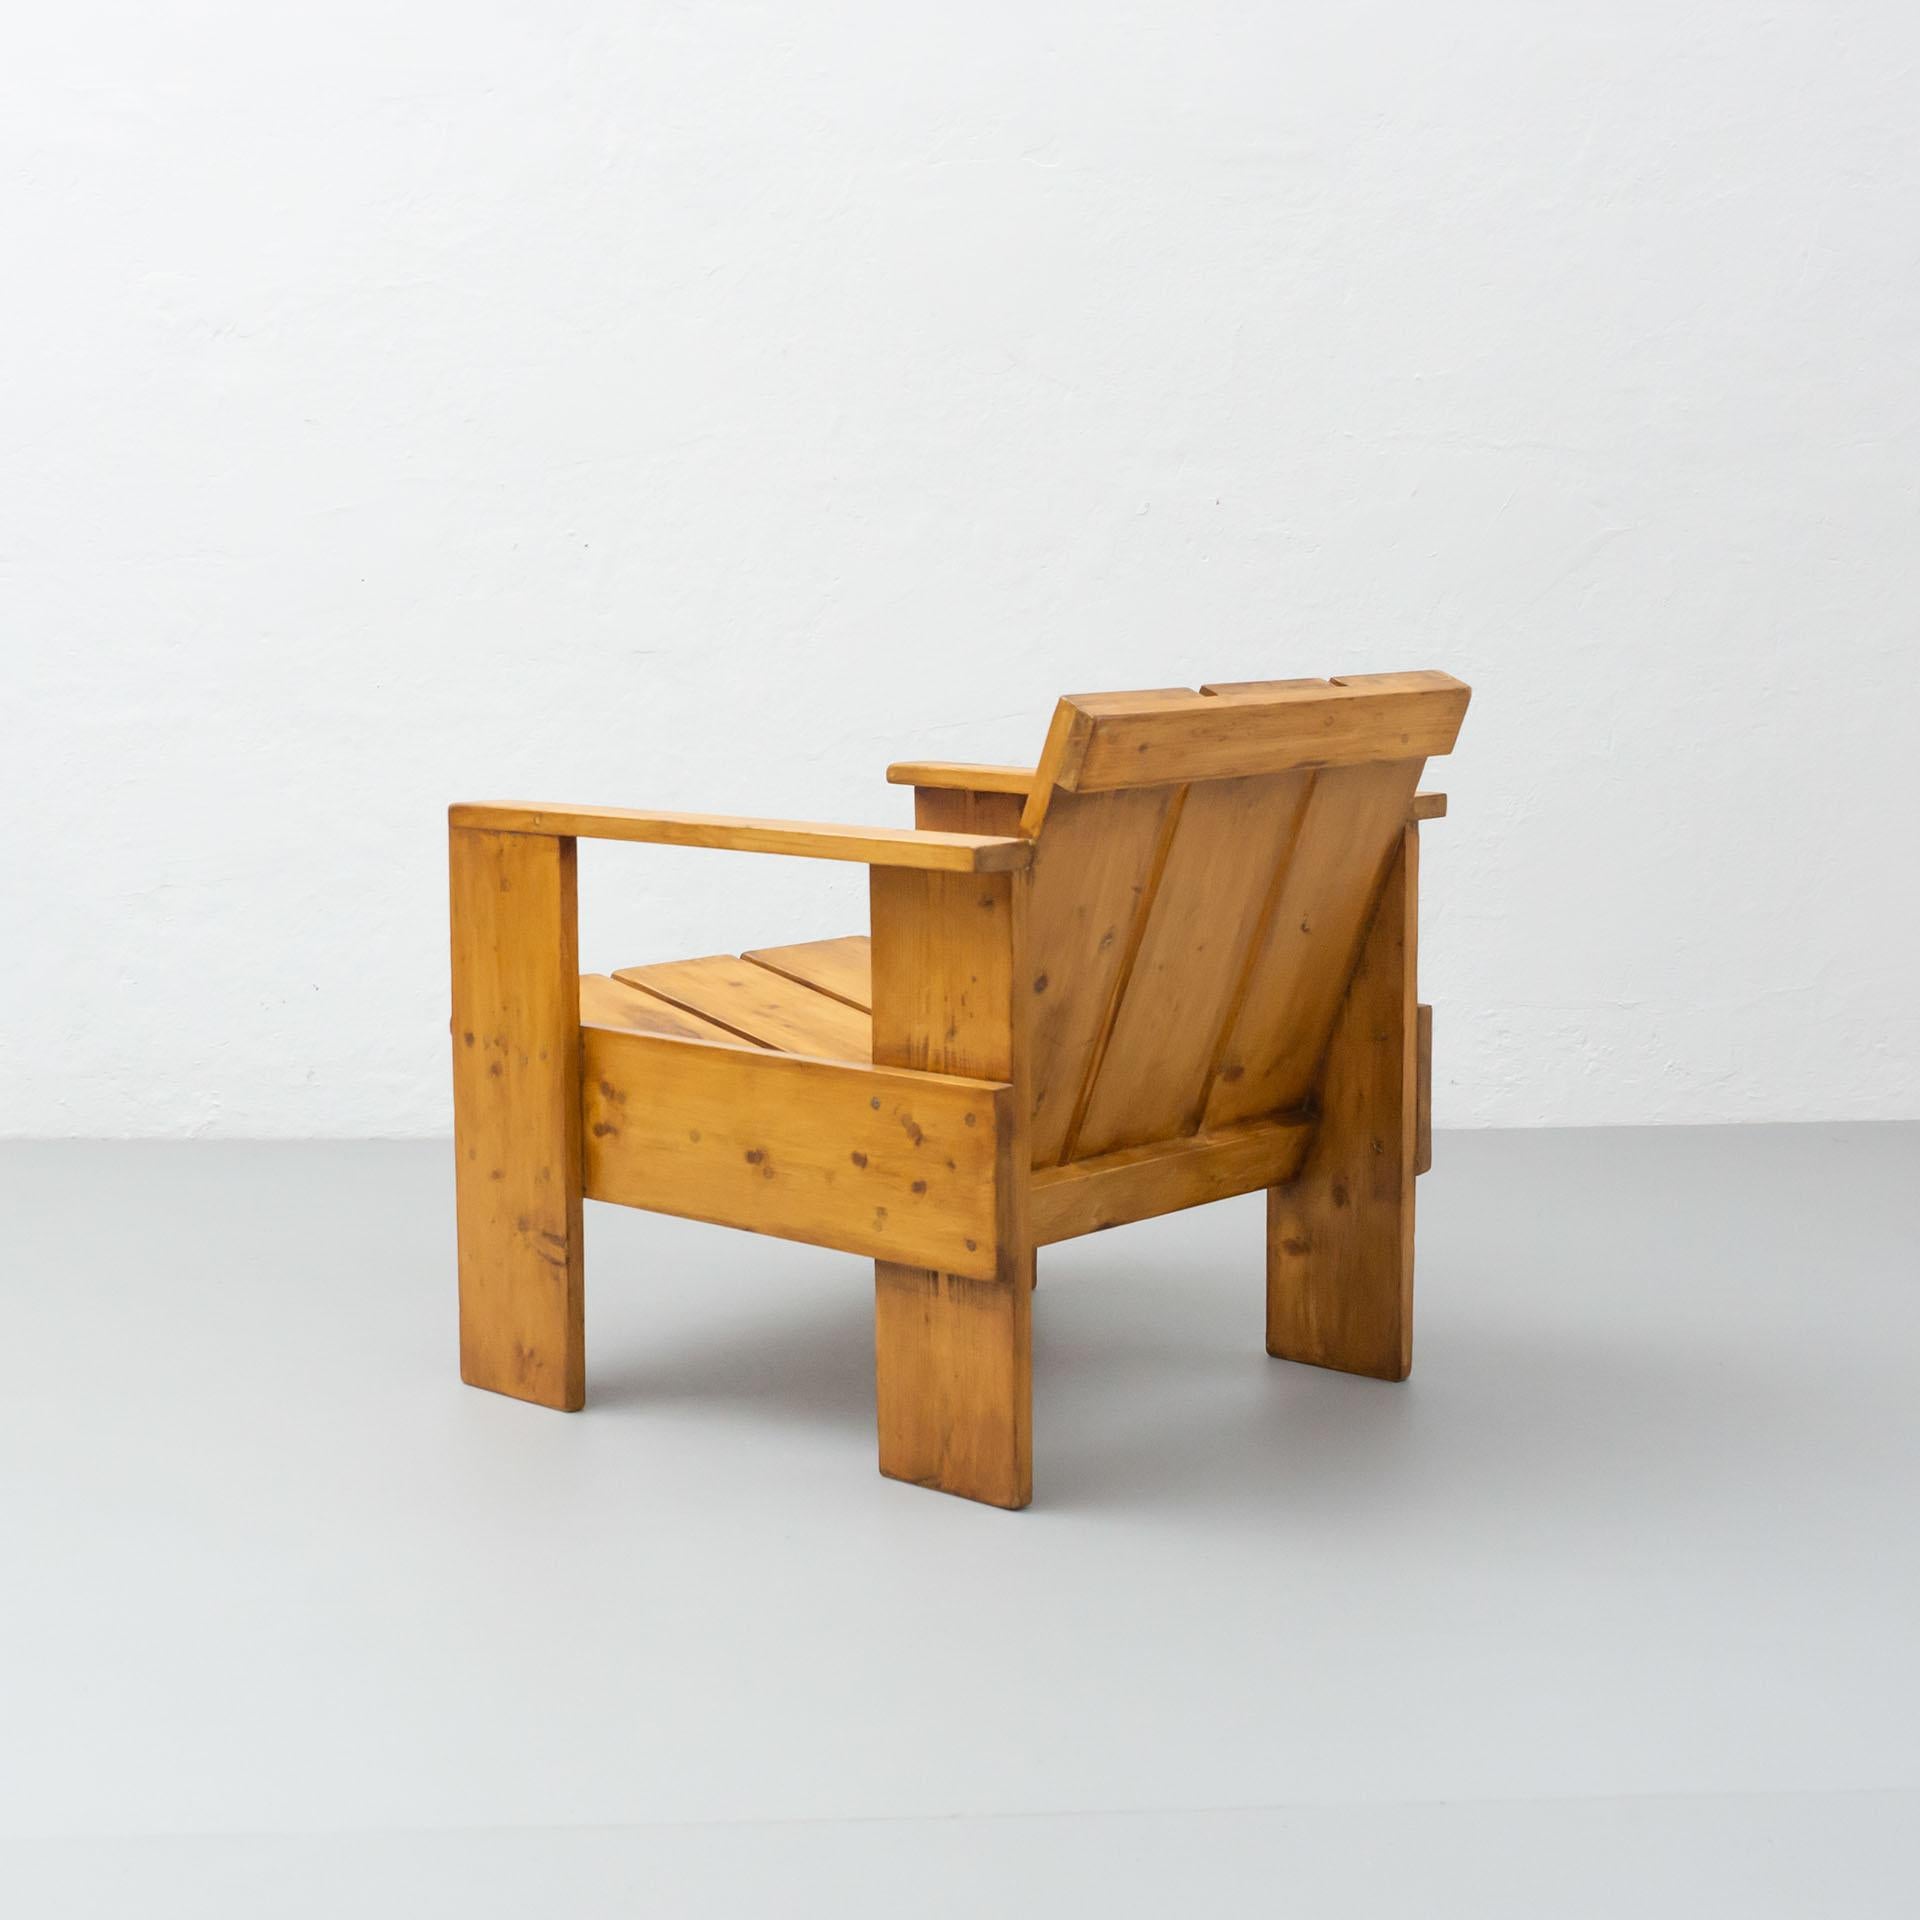 Dutch Gerrit Rietveld Mid-Century Modern Wood Crate Chair, circa 1950